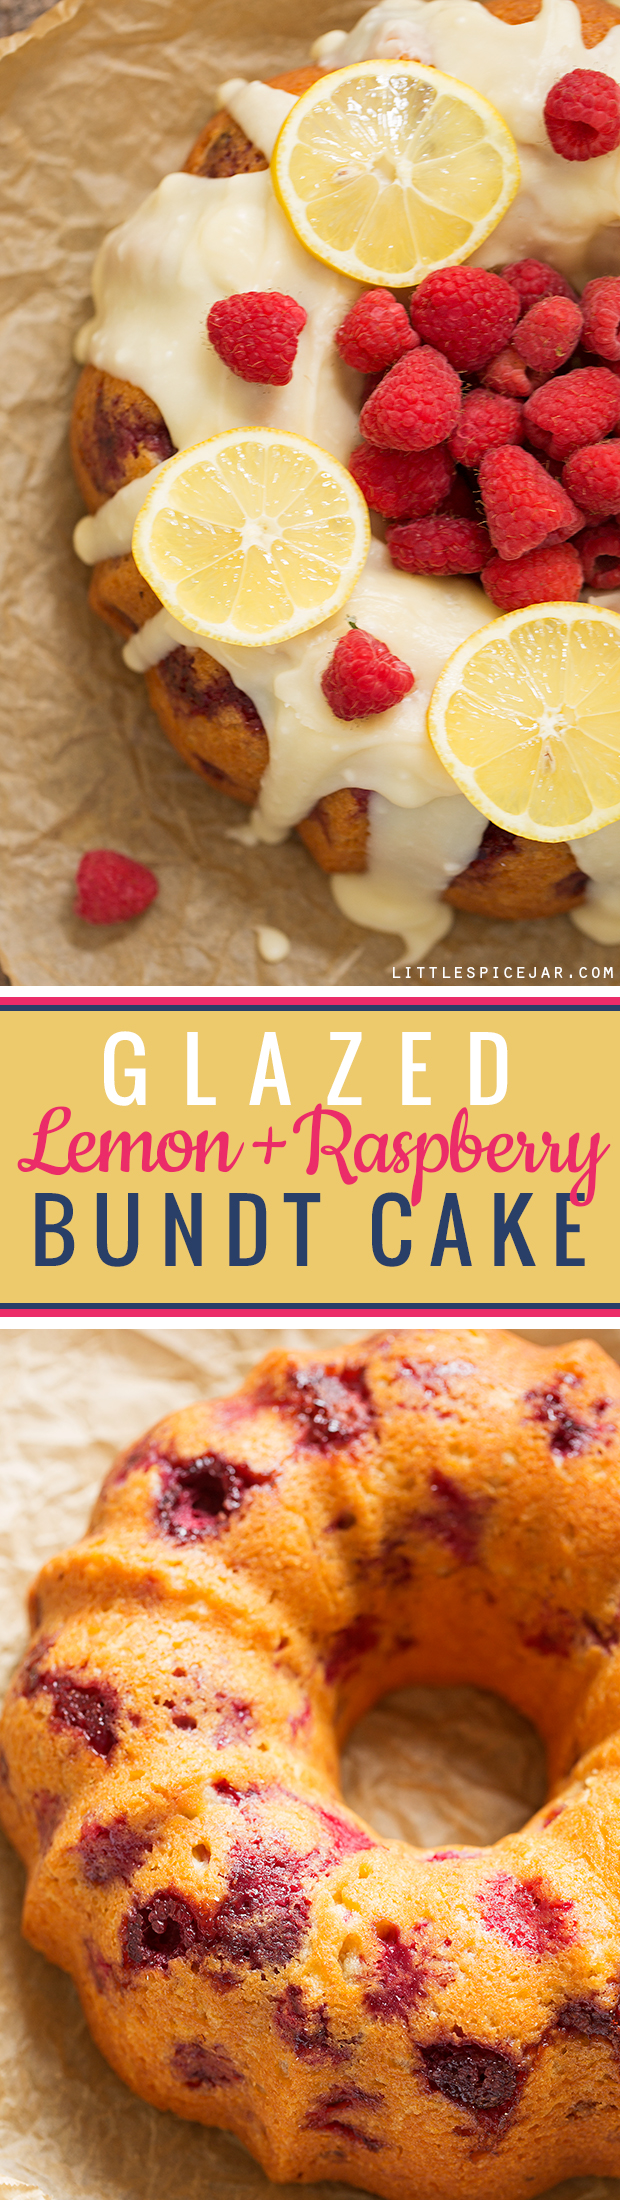 Glazed-Lemon-Raspberry-Bundt-Cake-9